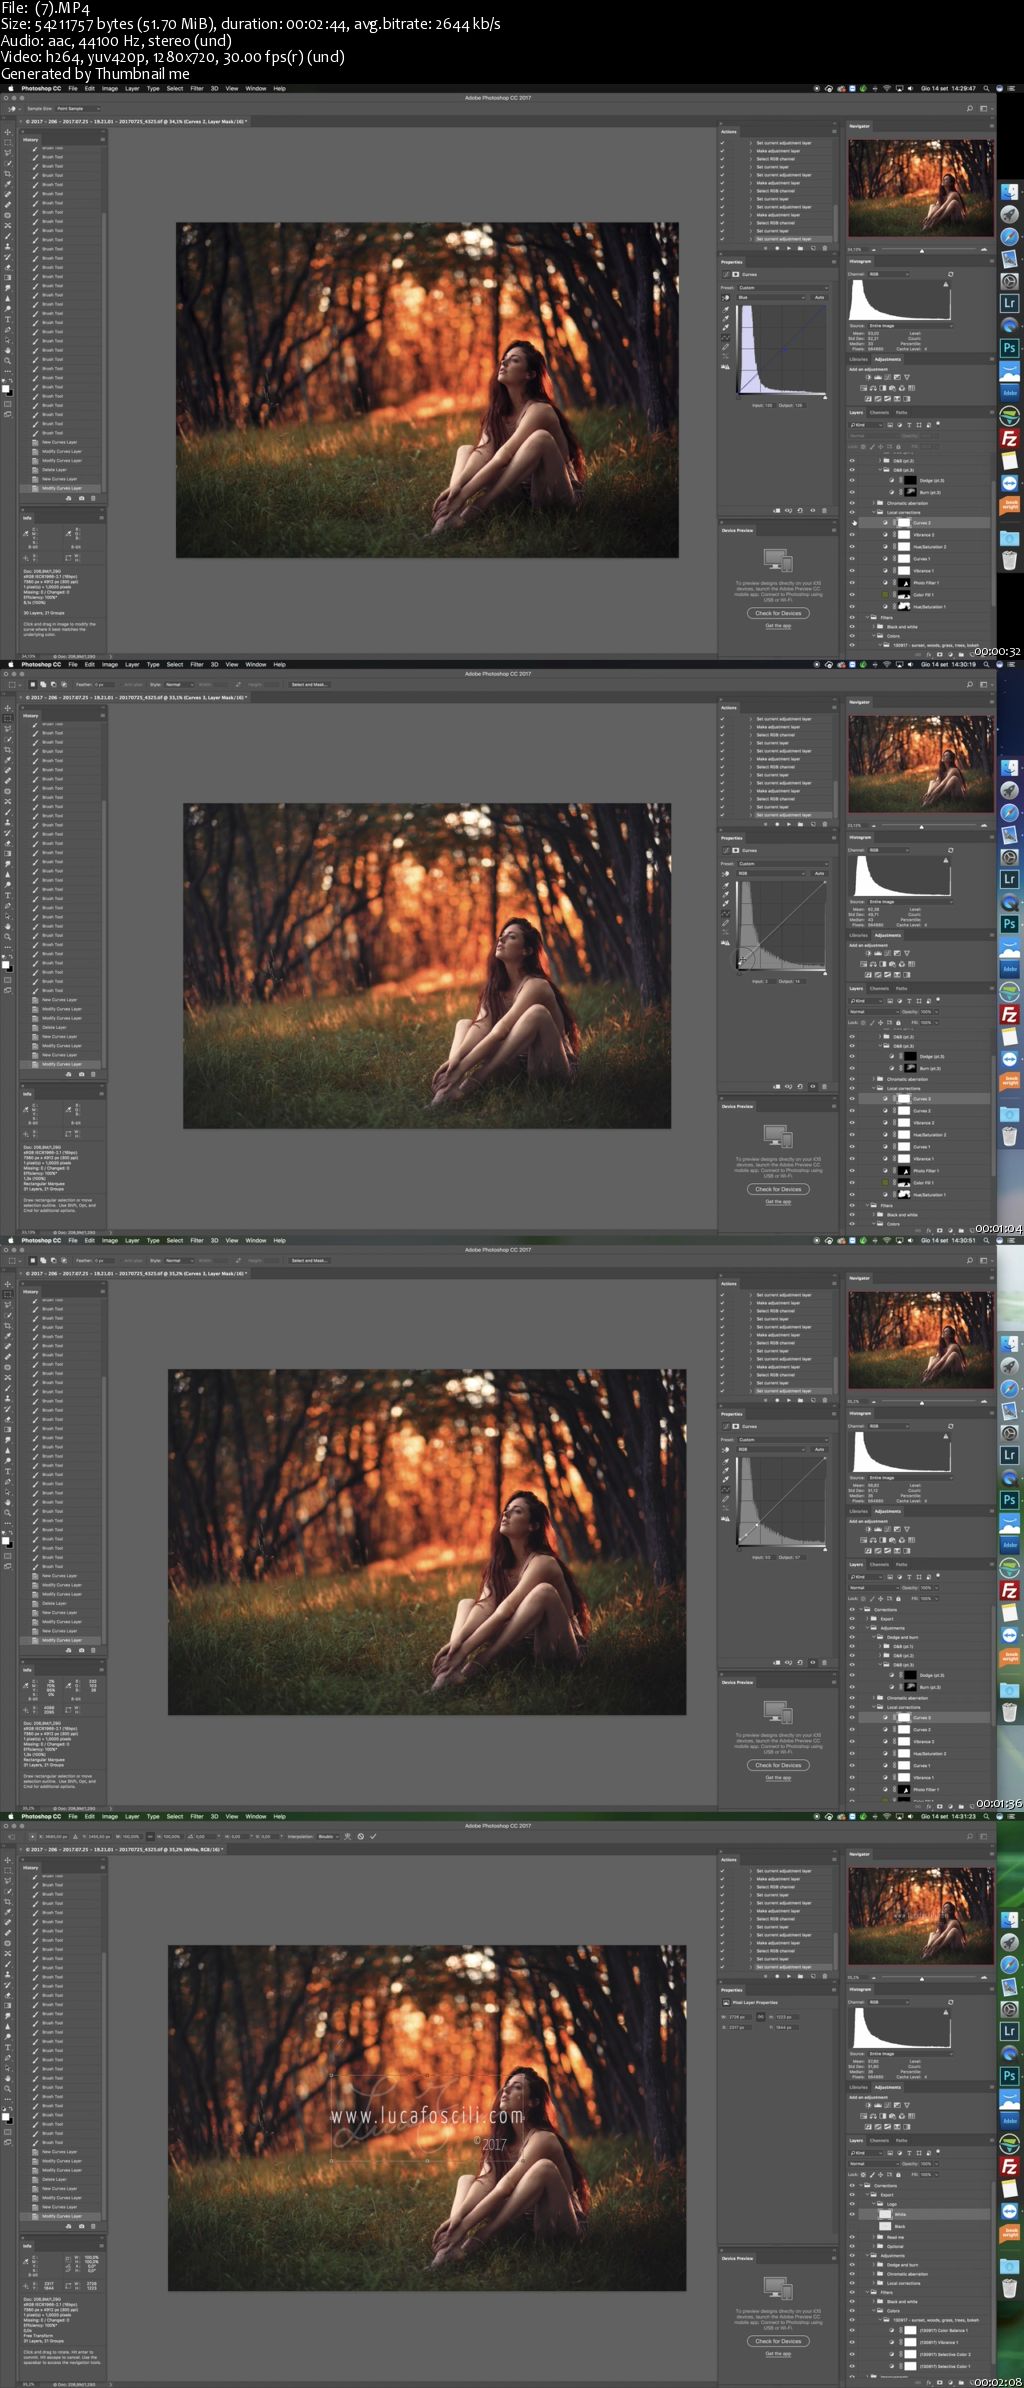 Adobe Lightroom and Photoshop - Portrait post production workflow (v3.0 - 13.09.17)